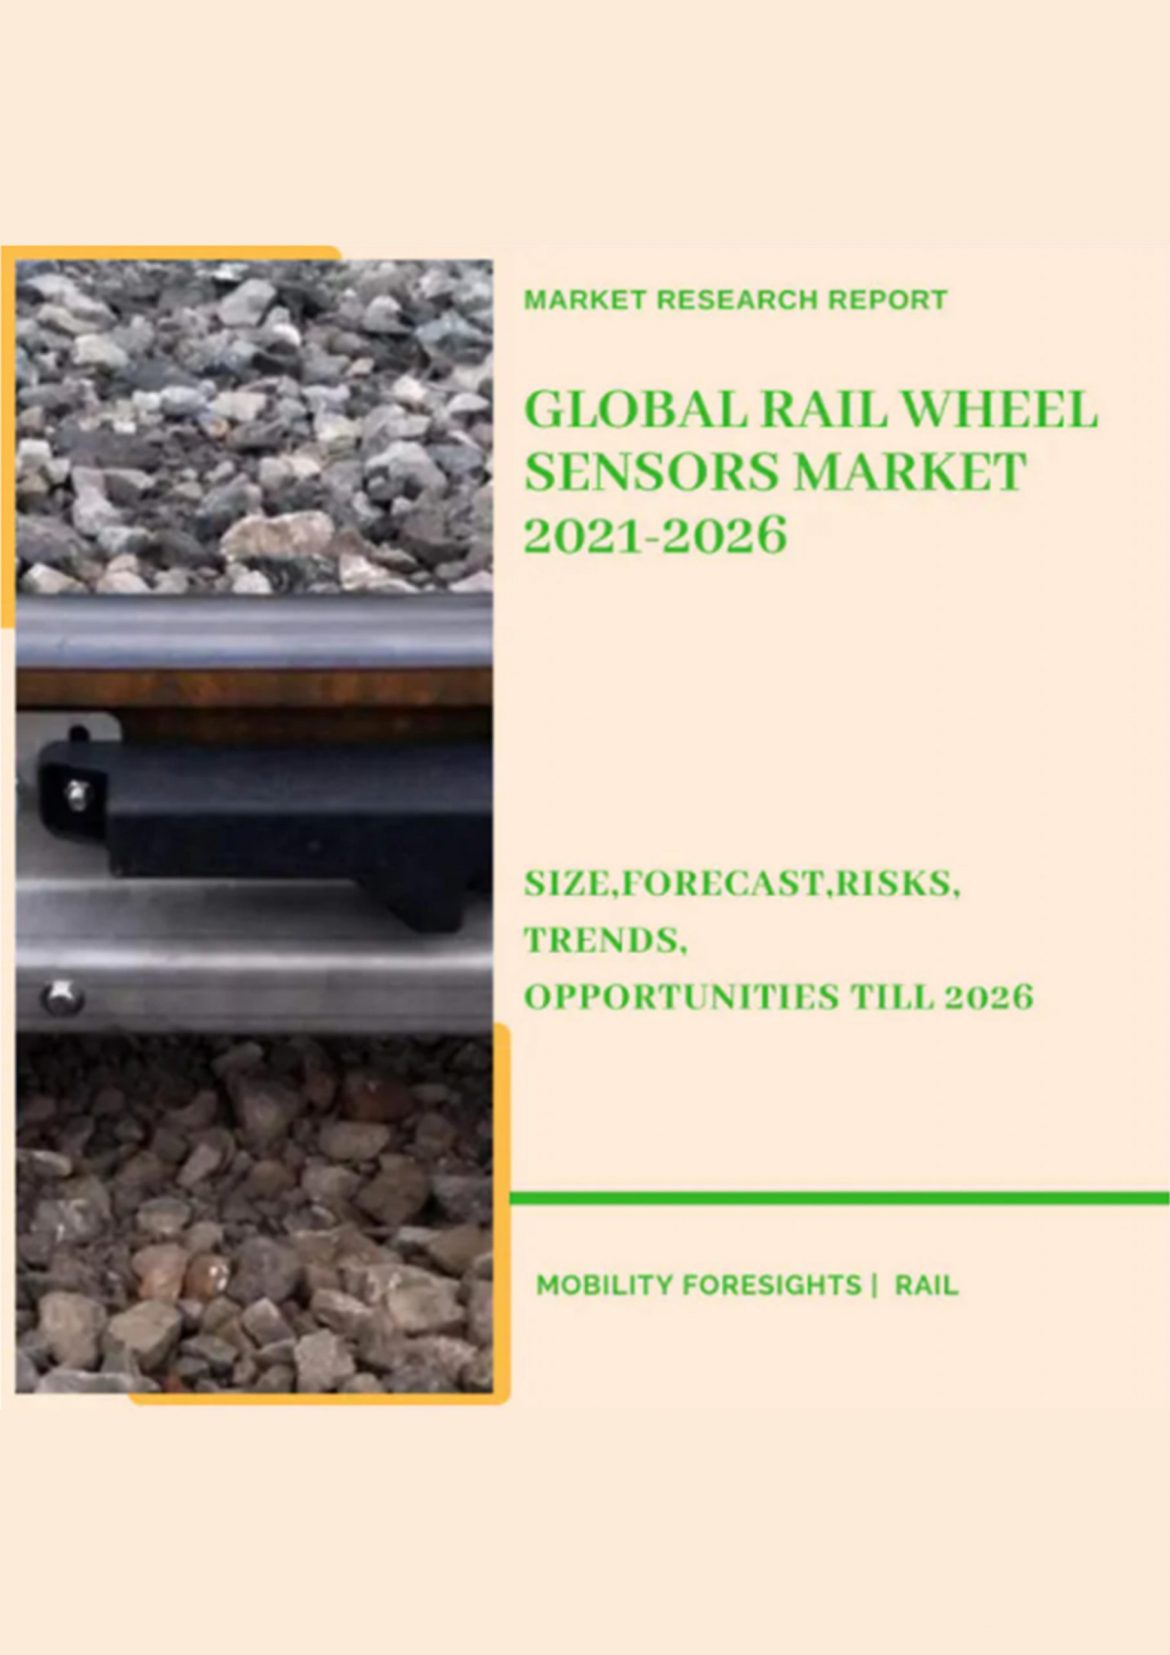 Global Rail Wheel Sensors Market 2021-2026